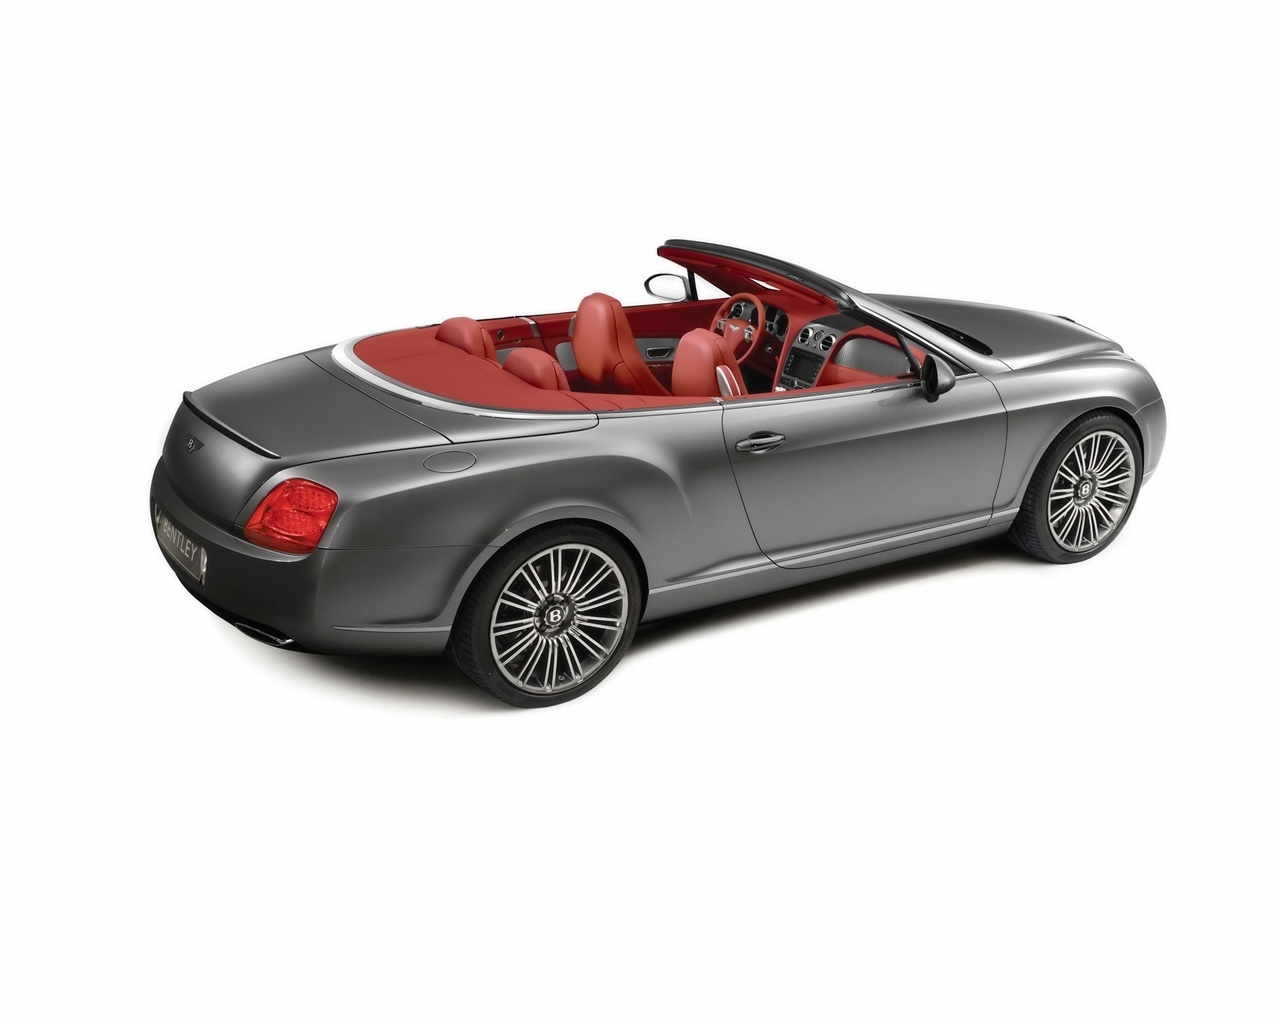 Bentley Continental GTC Speed Studio 2009 for 1280 x 1024 resolution